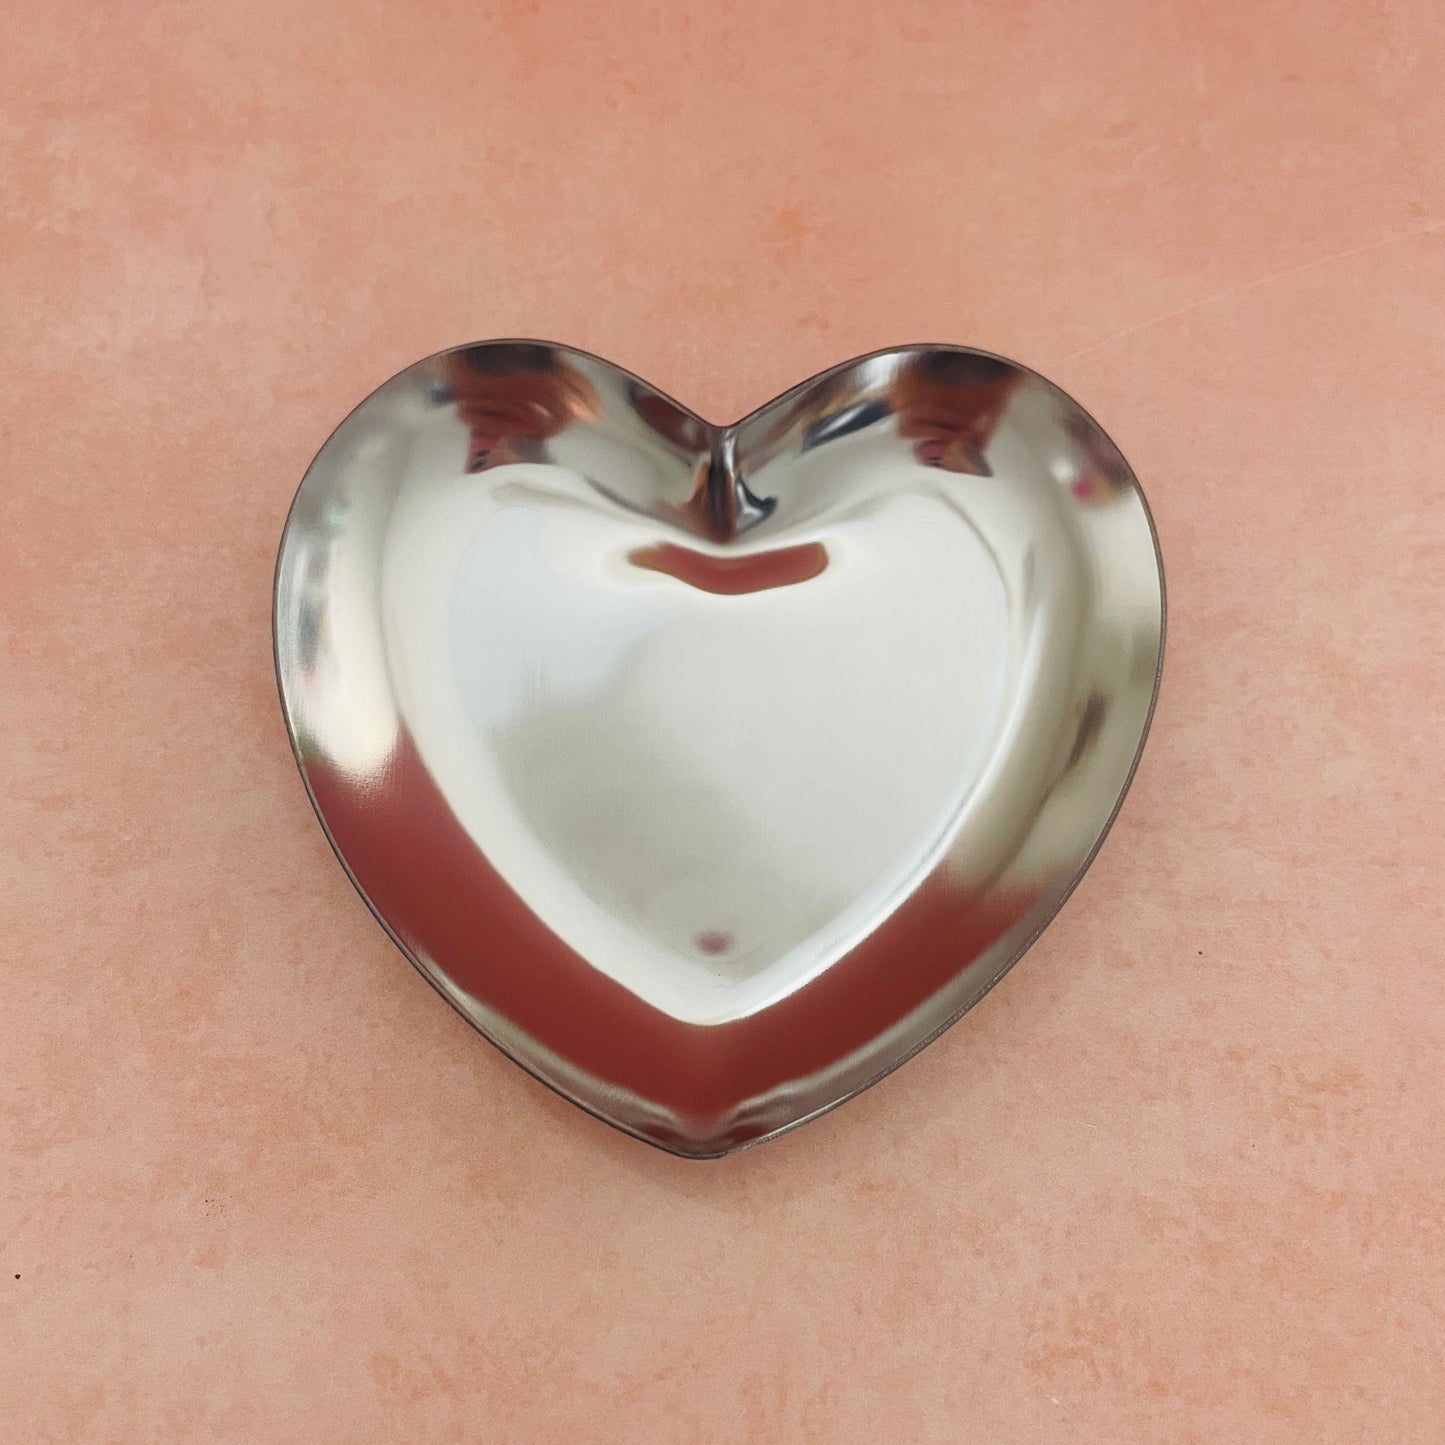 Heart Trinket Dish Metal form | clay trinket dish heart shaped bowl form